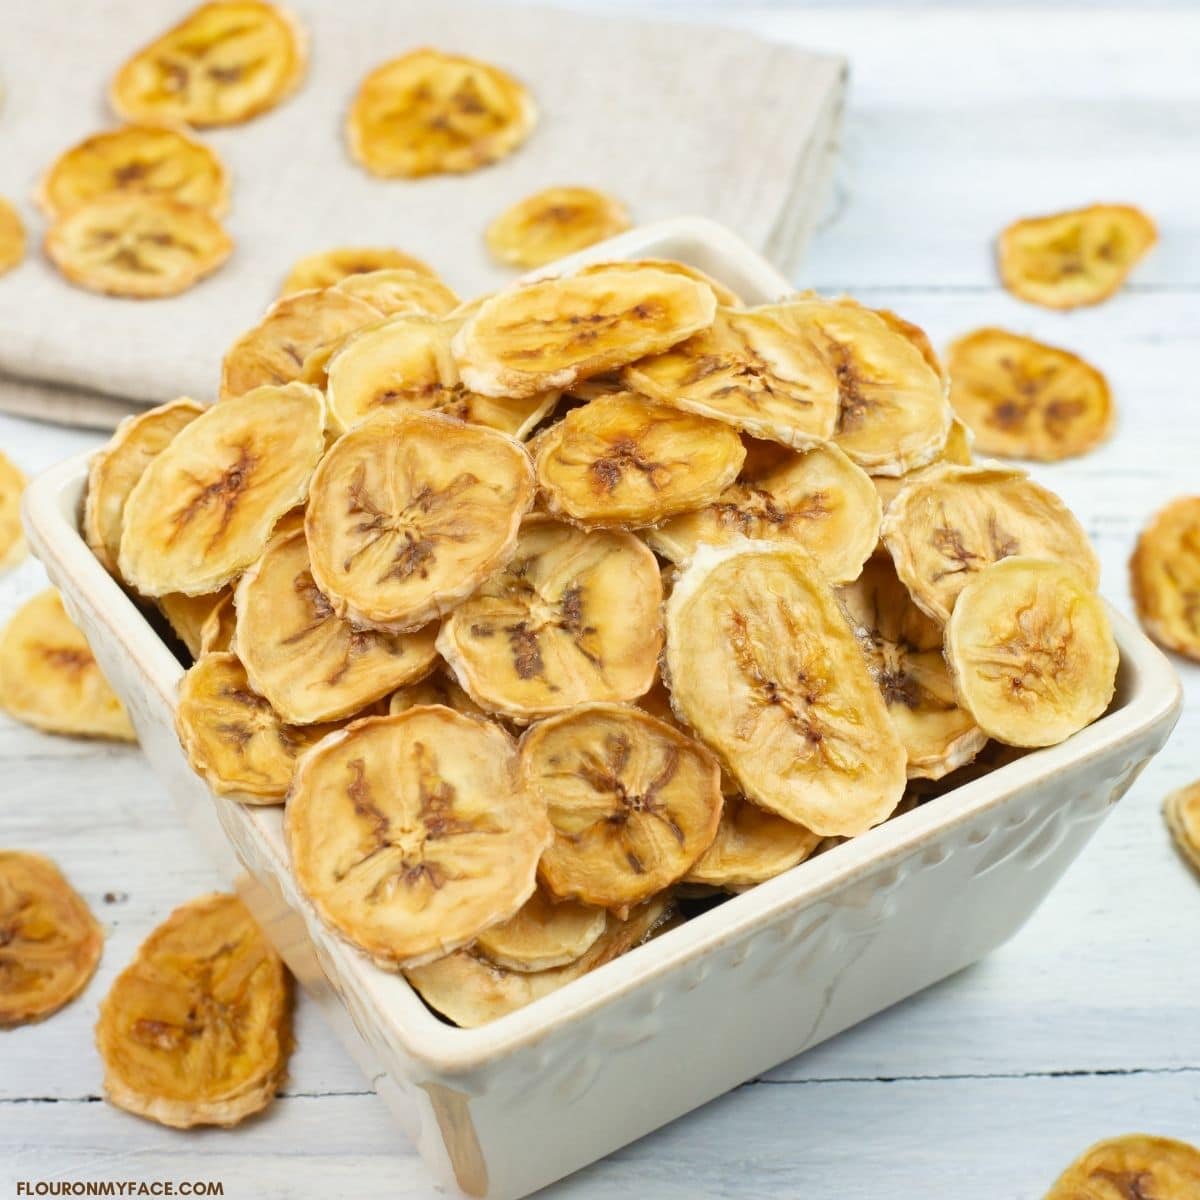 Nesco Food Dehydrator & Jerky Maker Tested: Dried Banana with